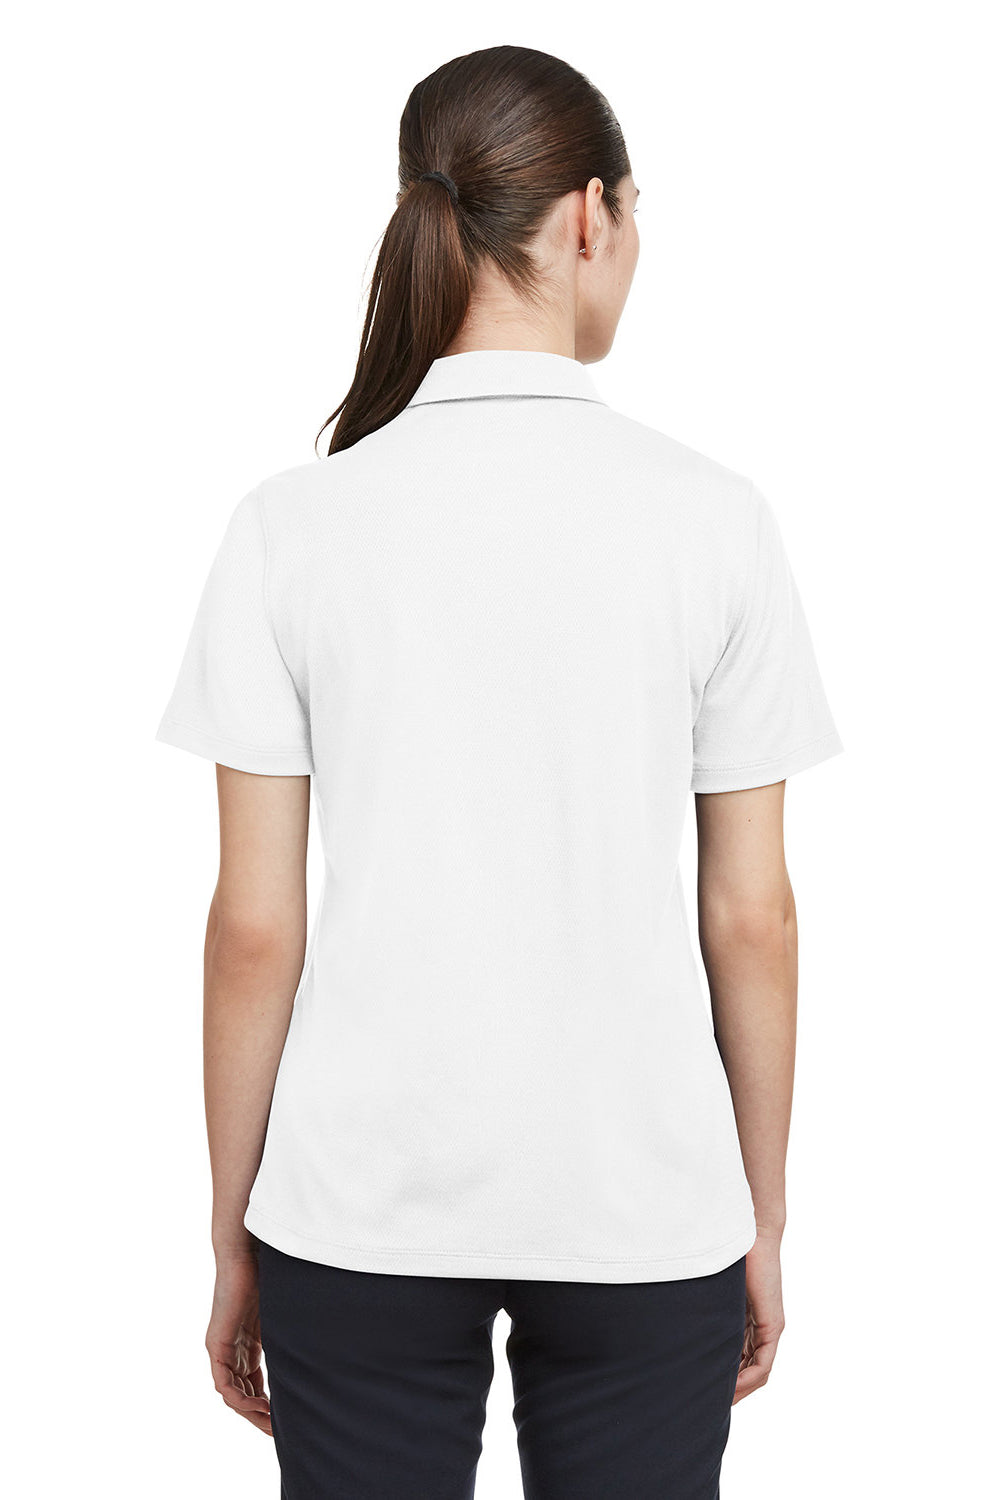 Under Armour 1370431 Womens Tech Moisture Wicking Short Sleeve Polo Shirt White Model Back